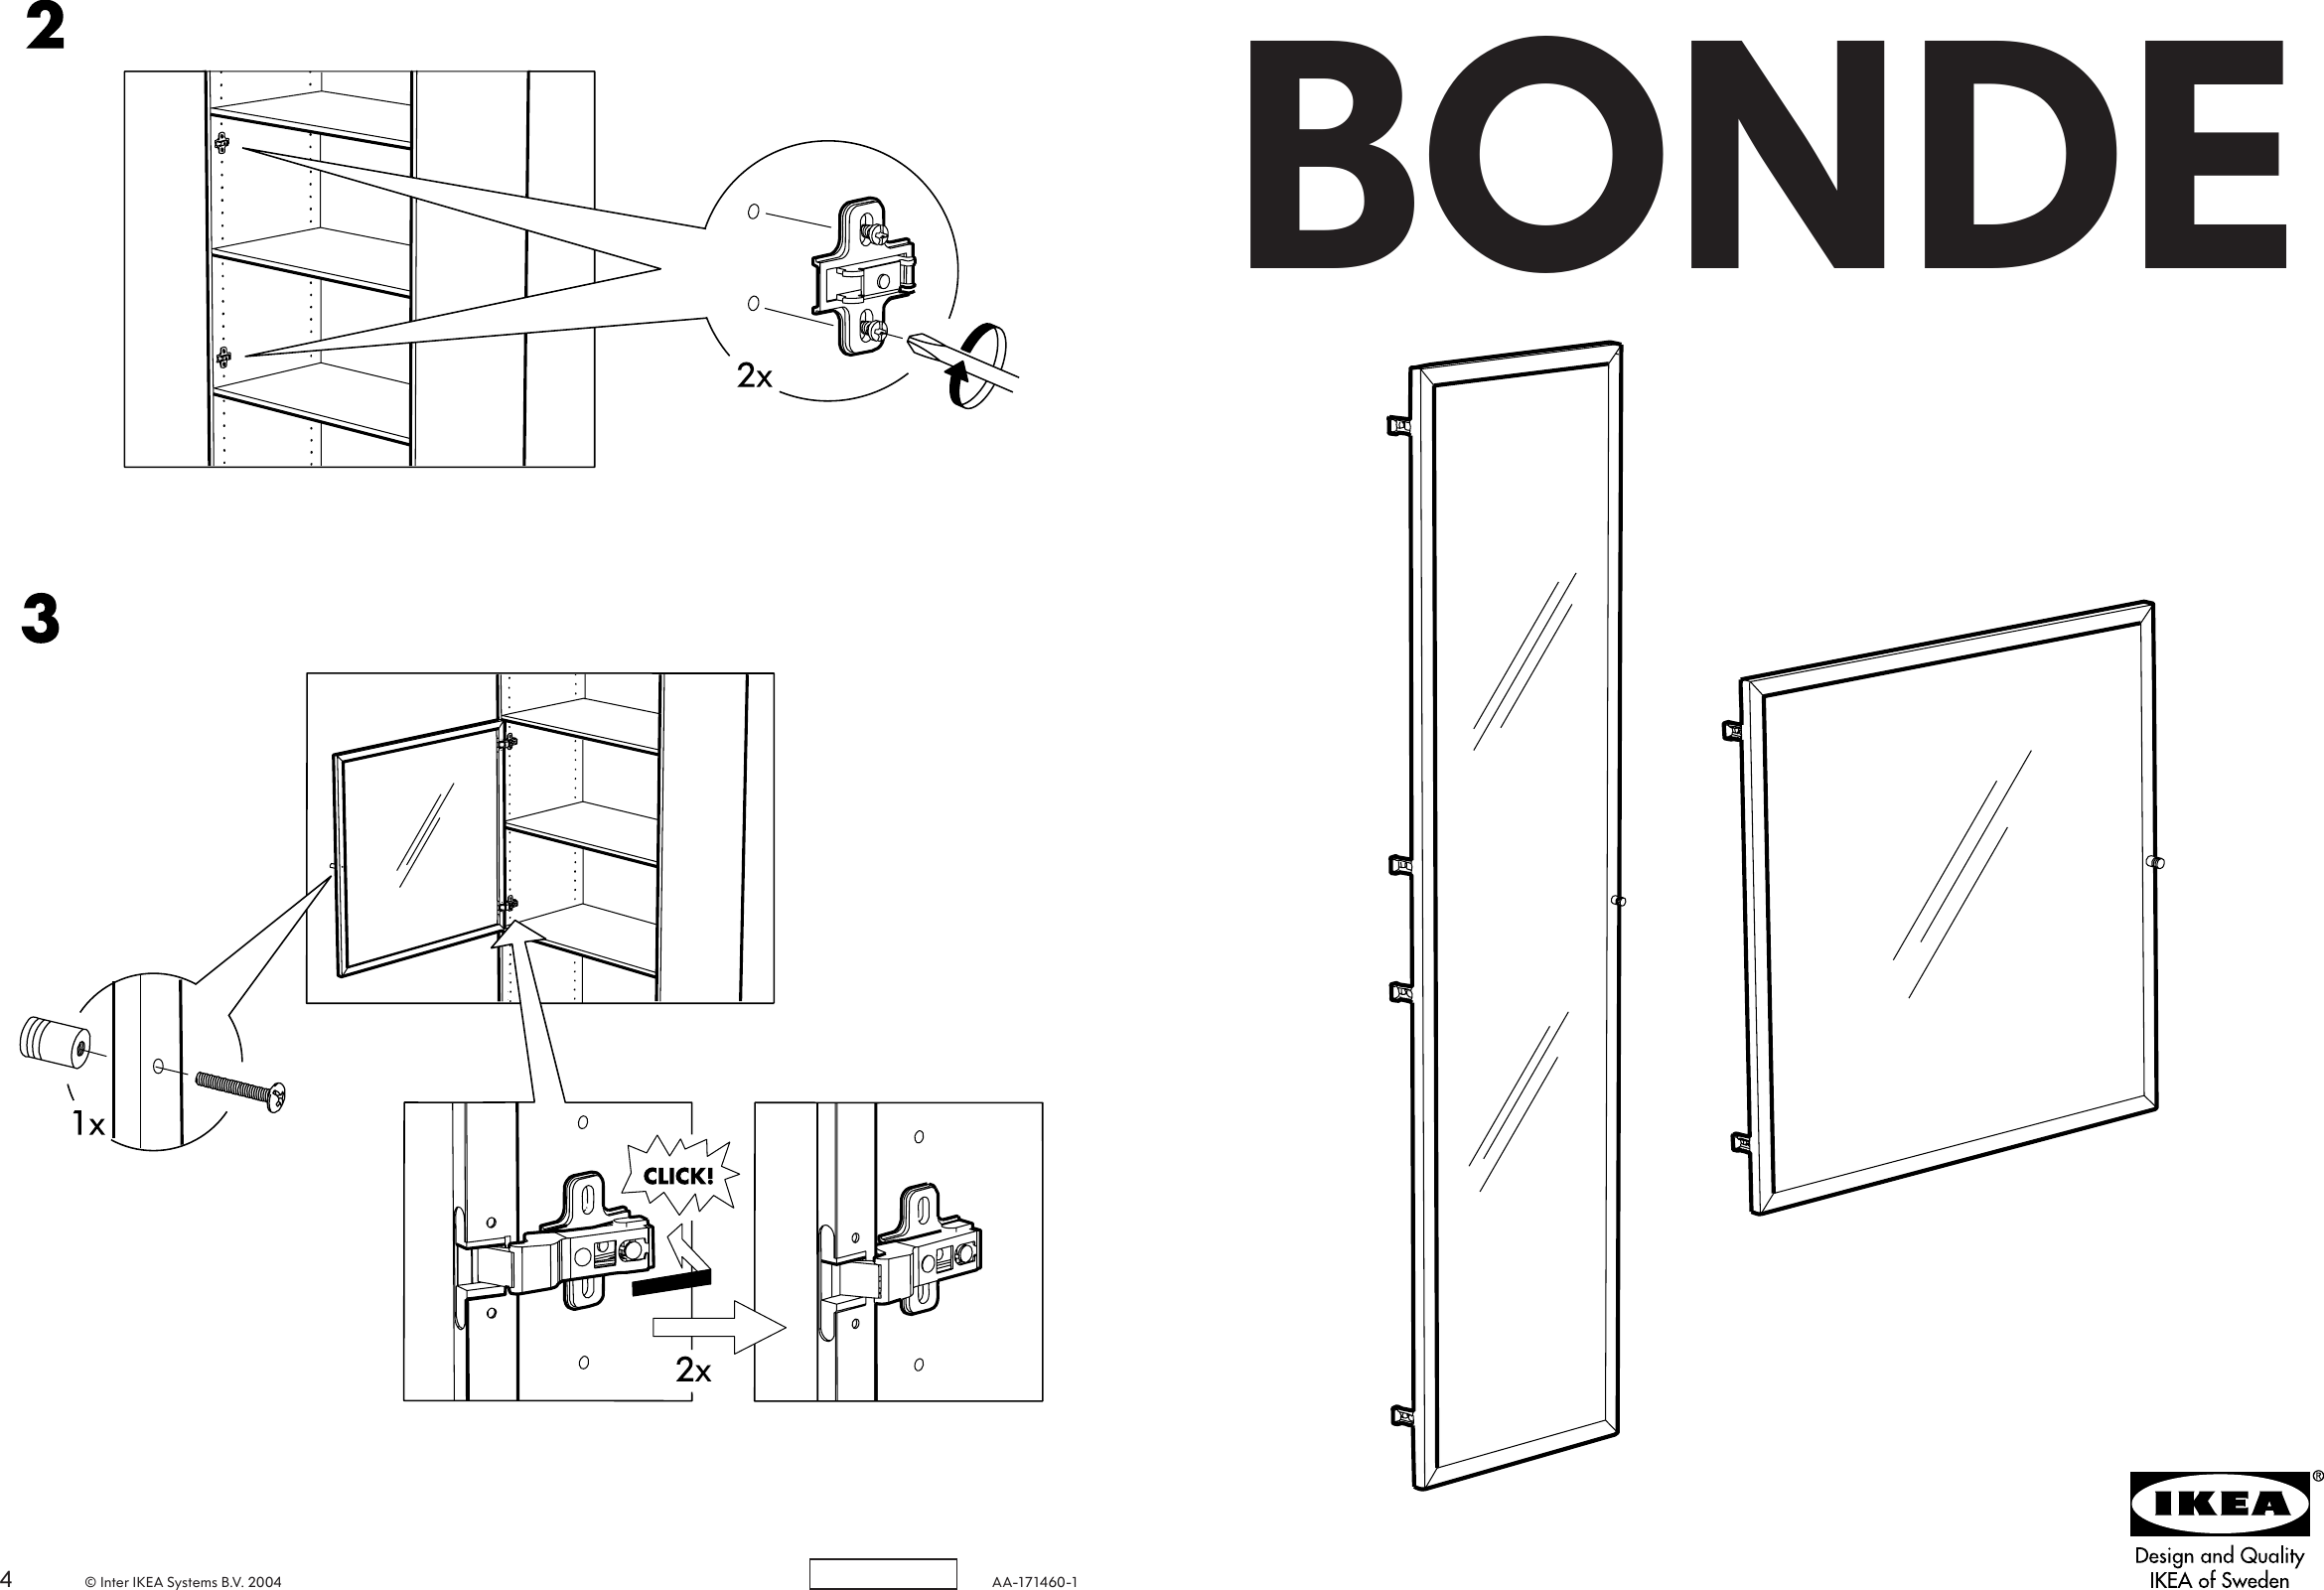 Page 1 of 2 - Ikea Ikea-Bonde-Glass-Door-28X28-Assembly-Instruction-2  Ikea-bonde-glass-door-28x28-assembly-instruction